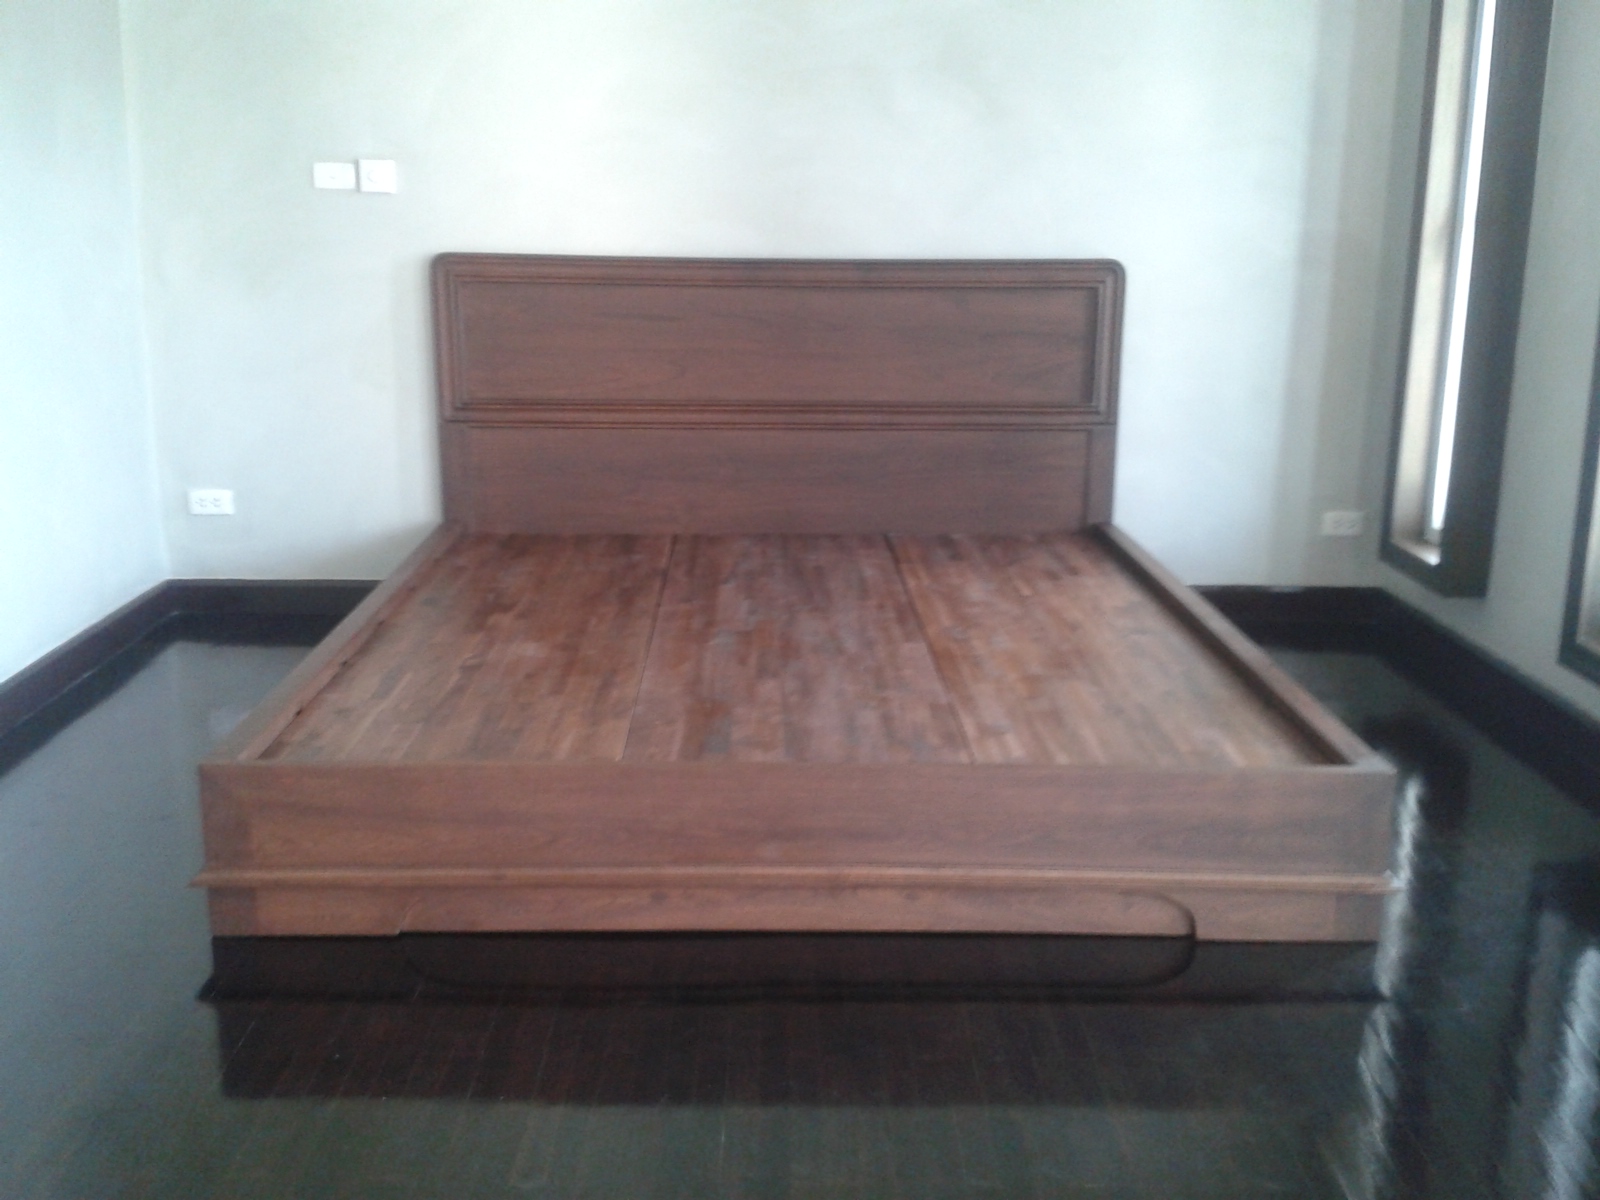 Bed teak wood king size